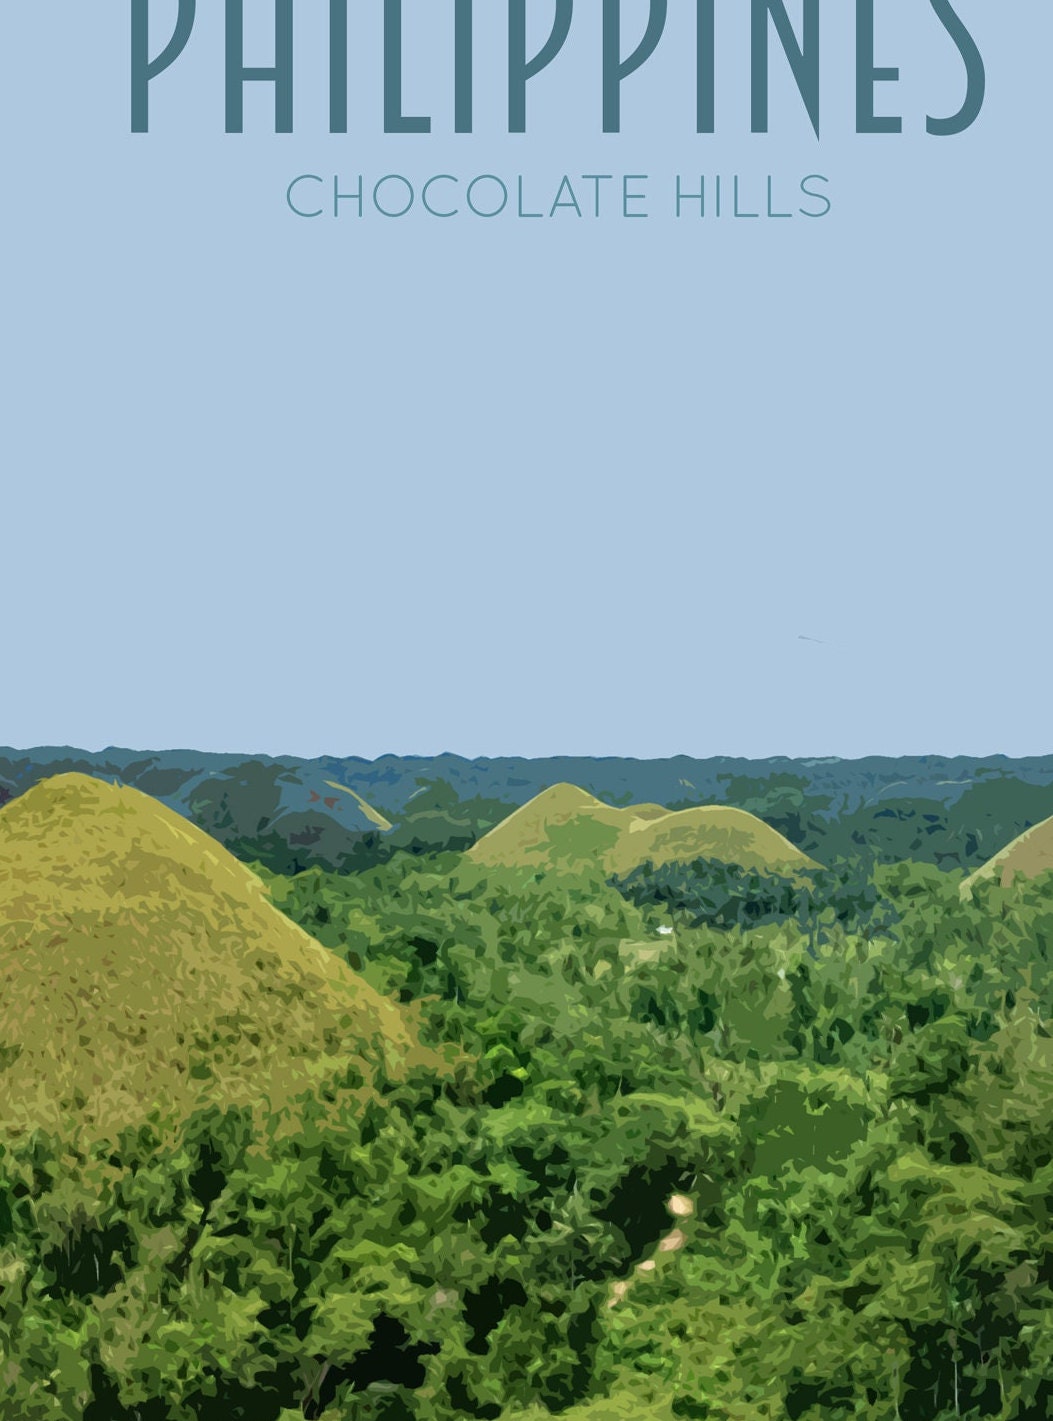 Philippines Travel Poster